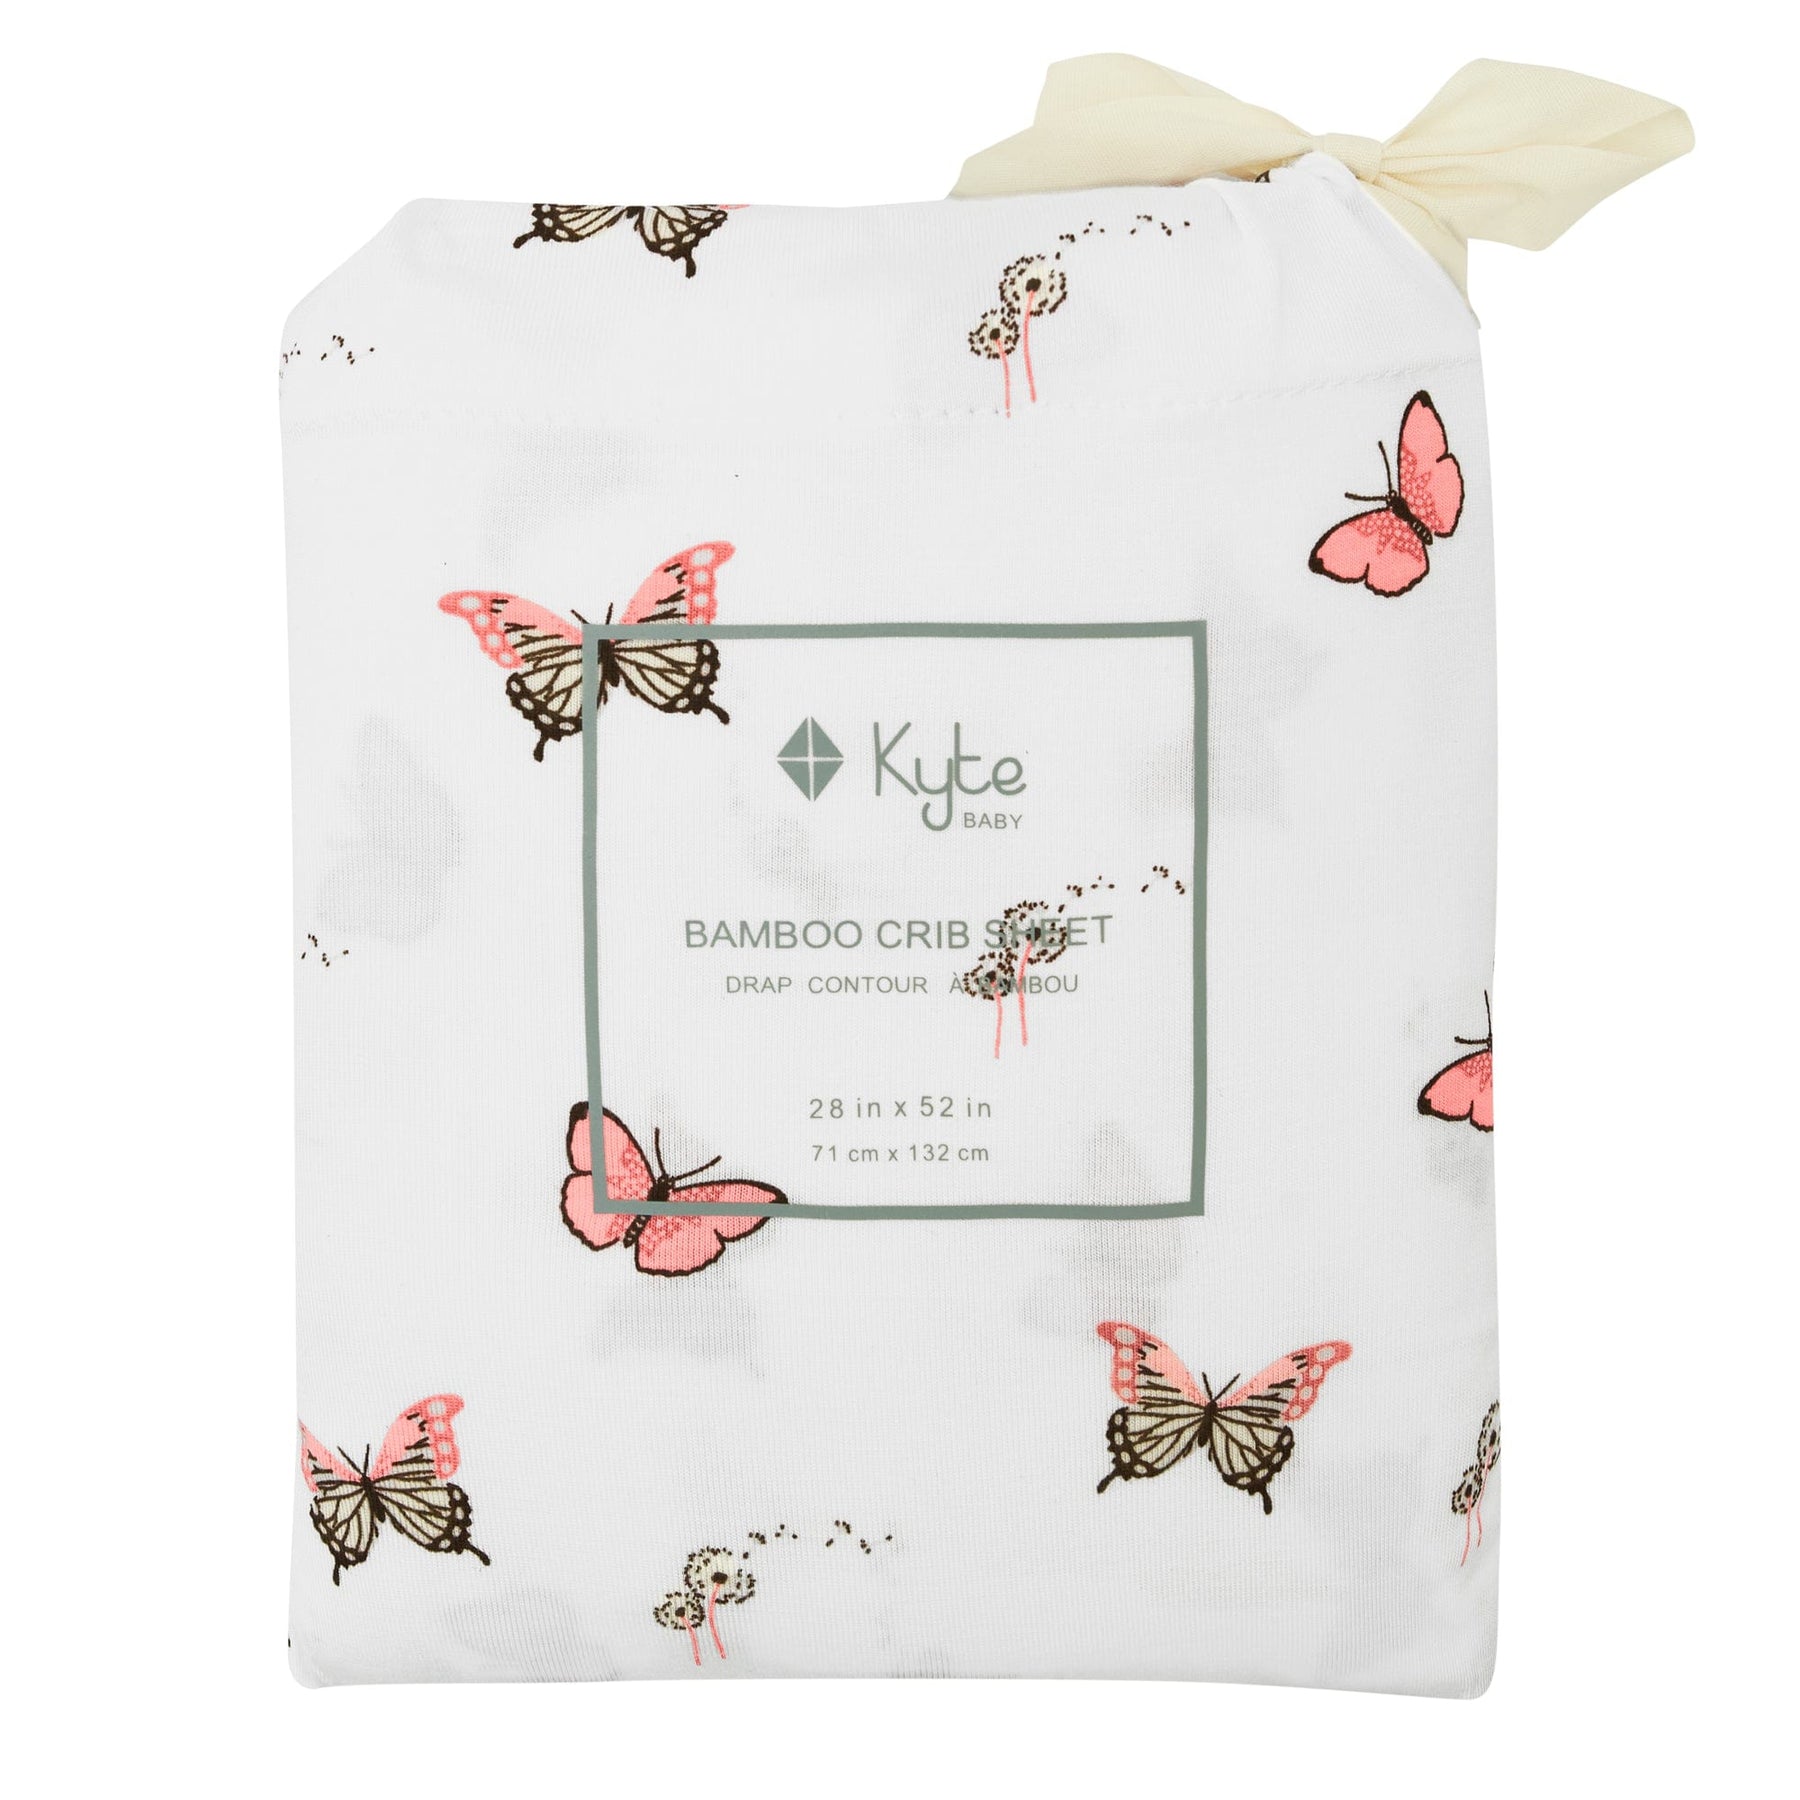 Butterfly Kyte Baby standard Crib Sheet in bag